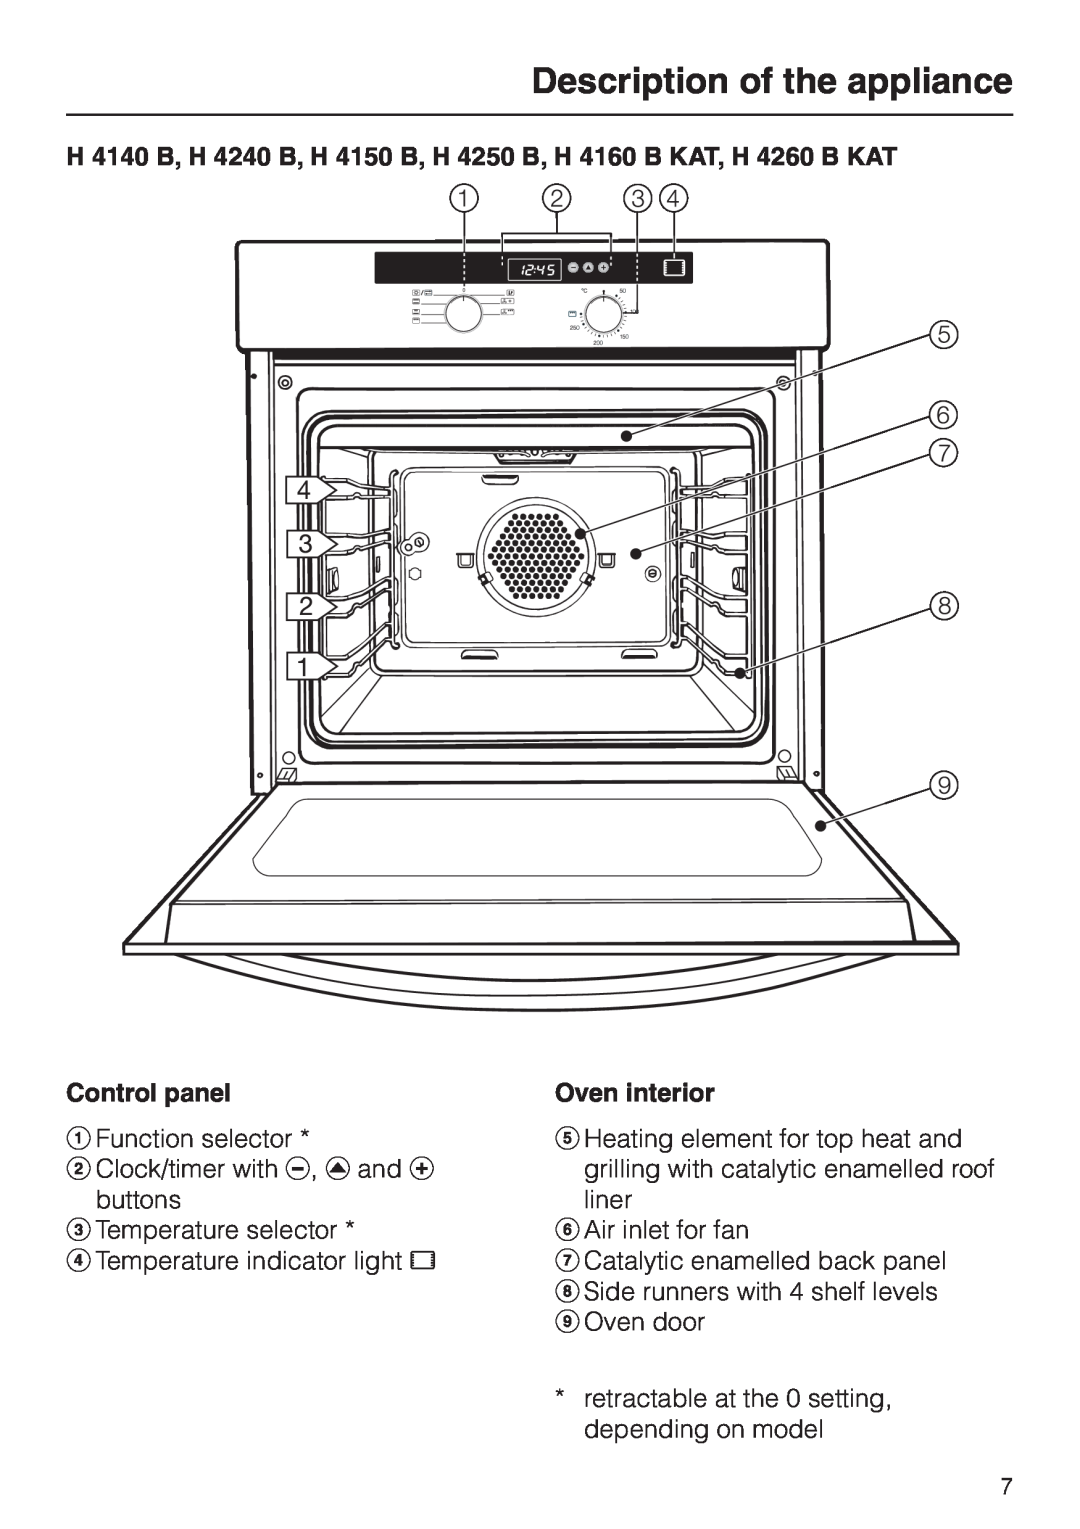 Miele H 4230, H 4150, H 4220, H 4130, H 4160, H 4120, H 4140, H 4260 Description of the appliance, Control panel, Oven interior 